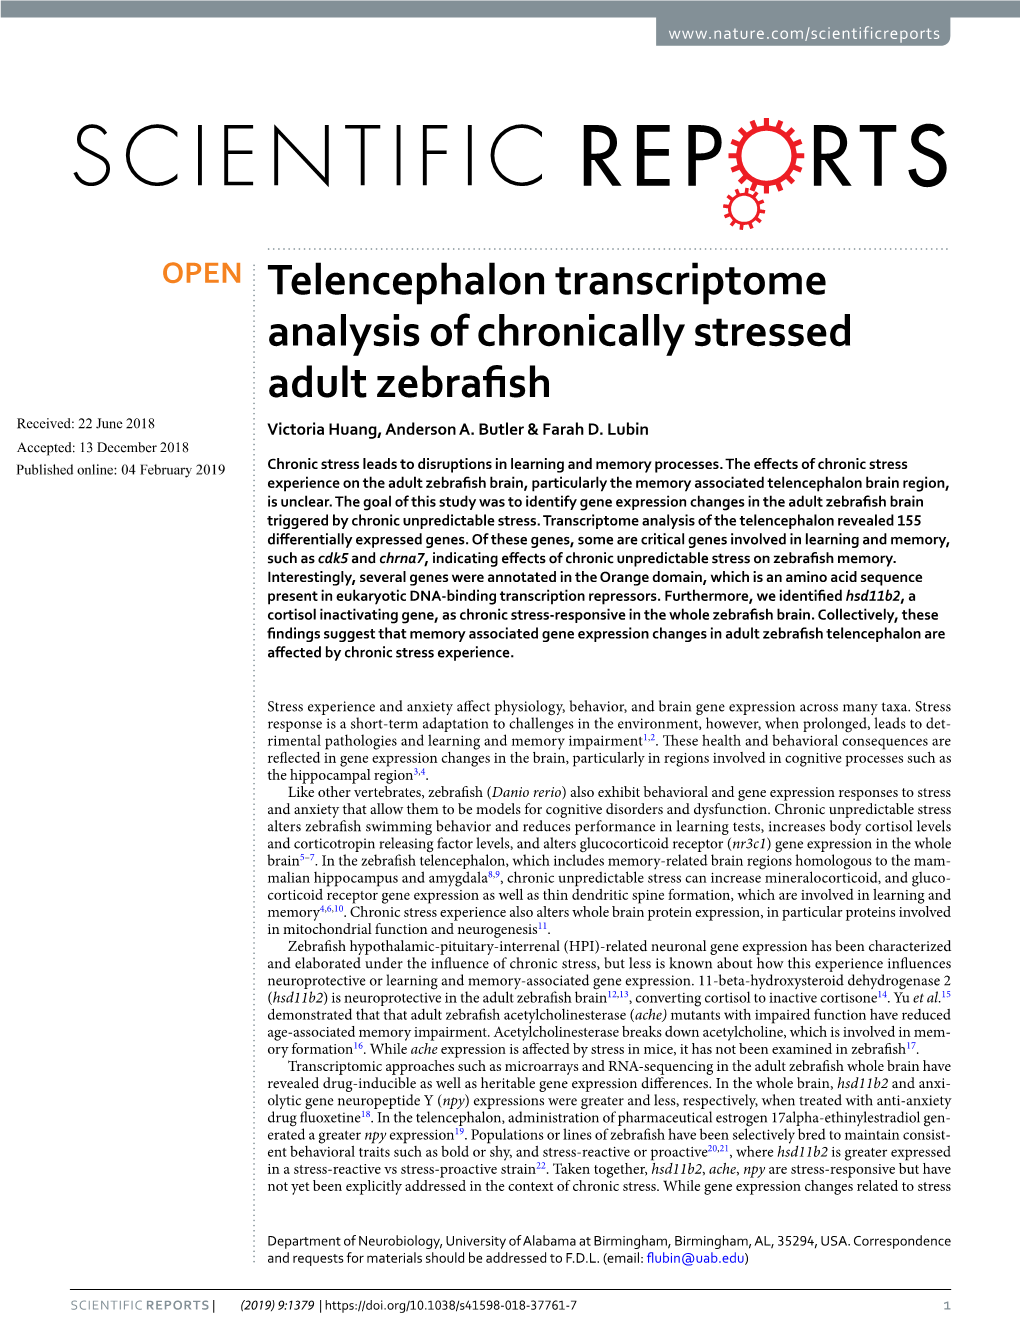 Telencephalon Transcriptome Analysis of Chronically Stressed Adult Zebrafish